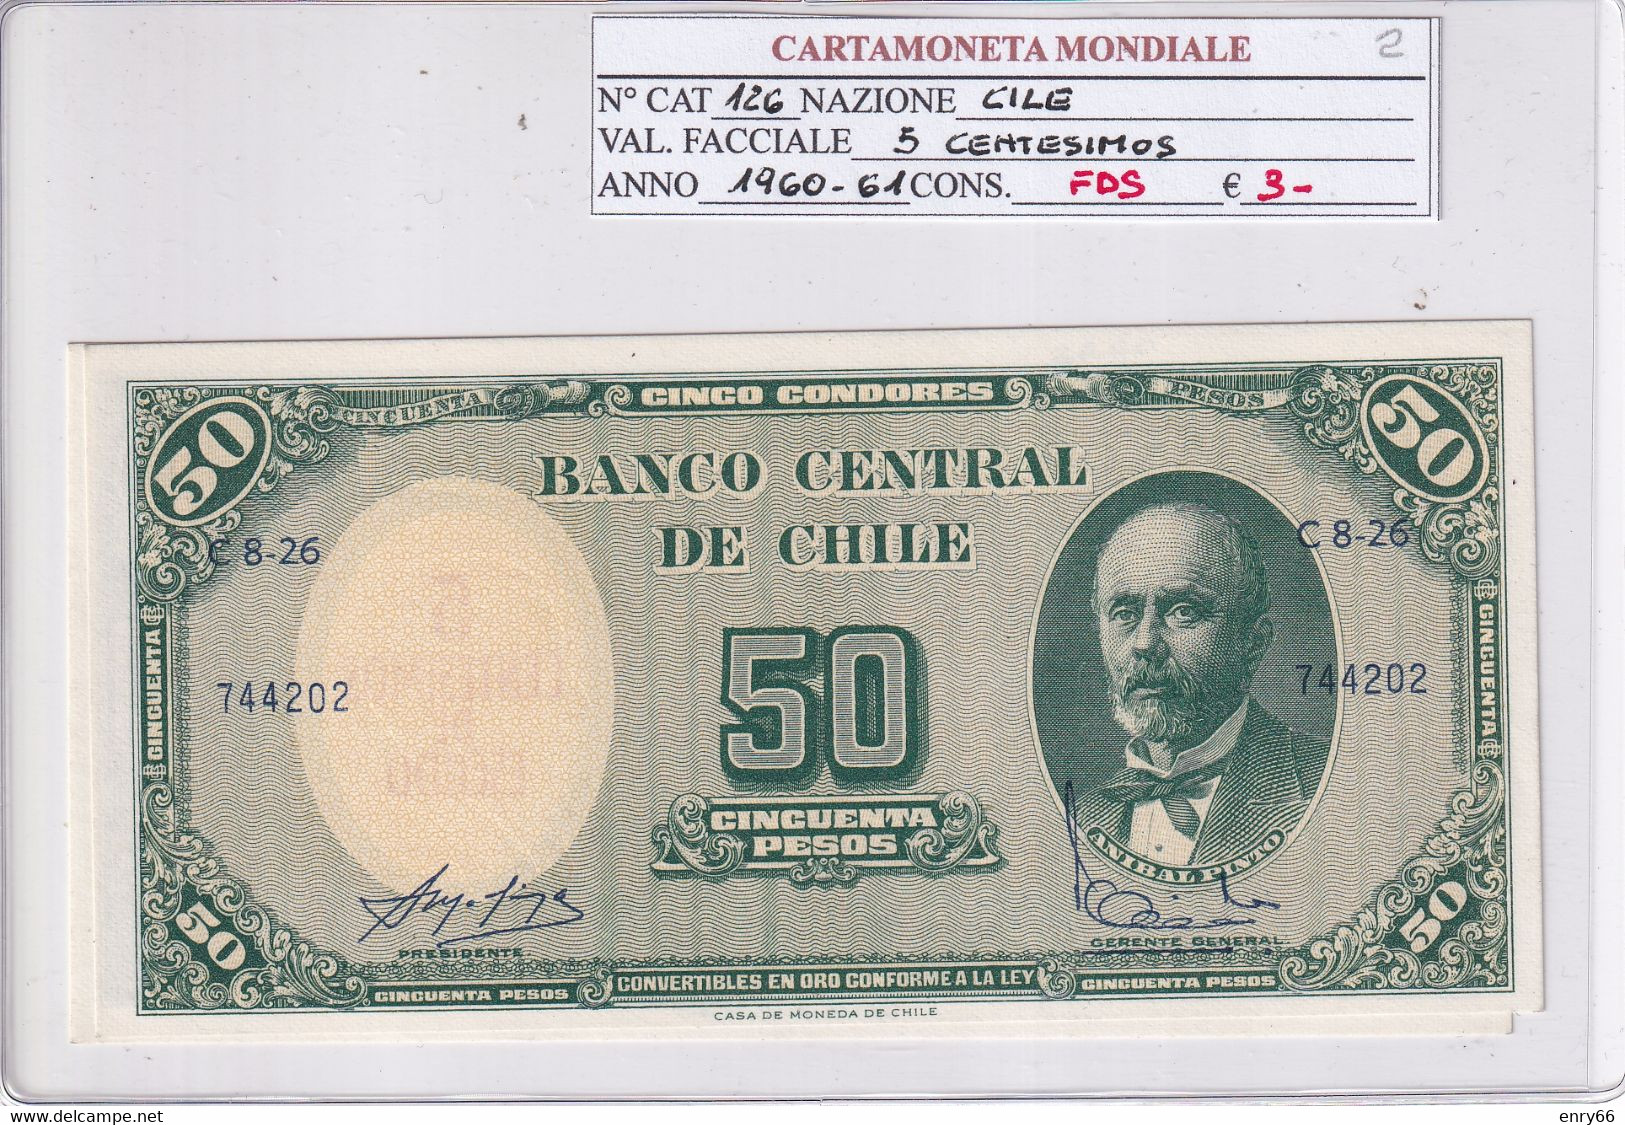 CILE 50 PESOS 1960-61 P126 - Chili